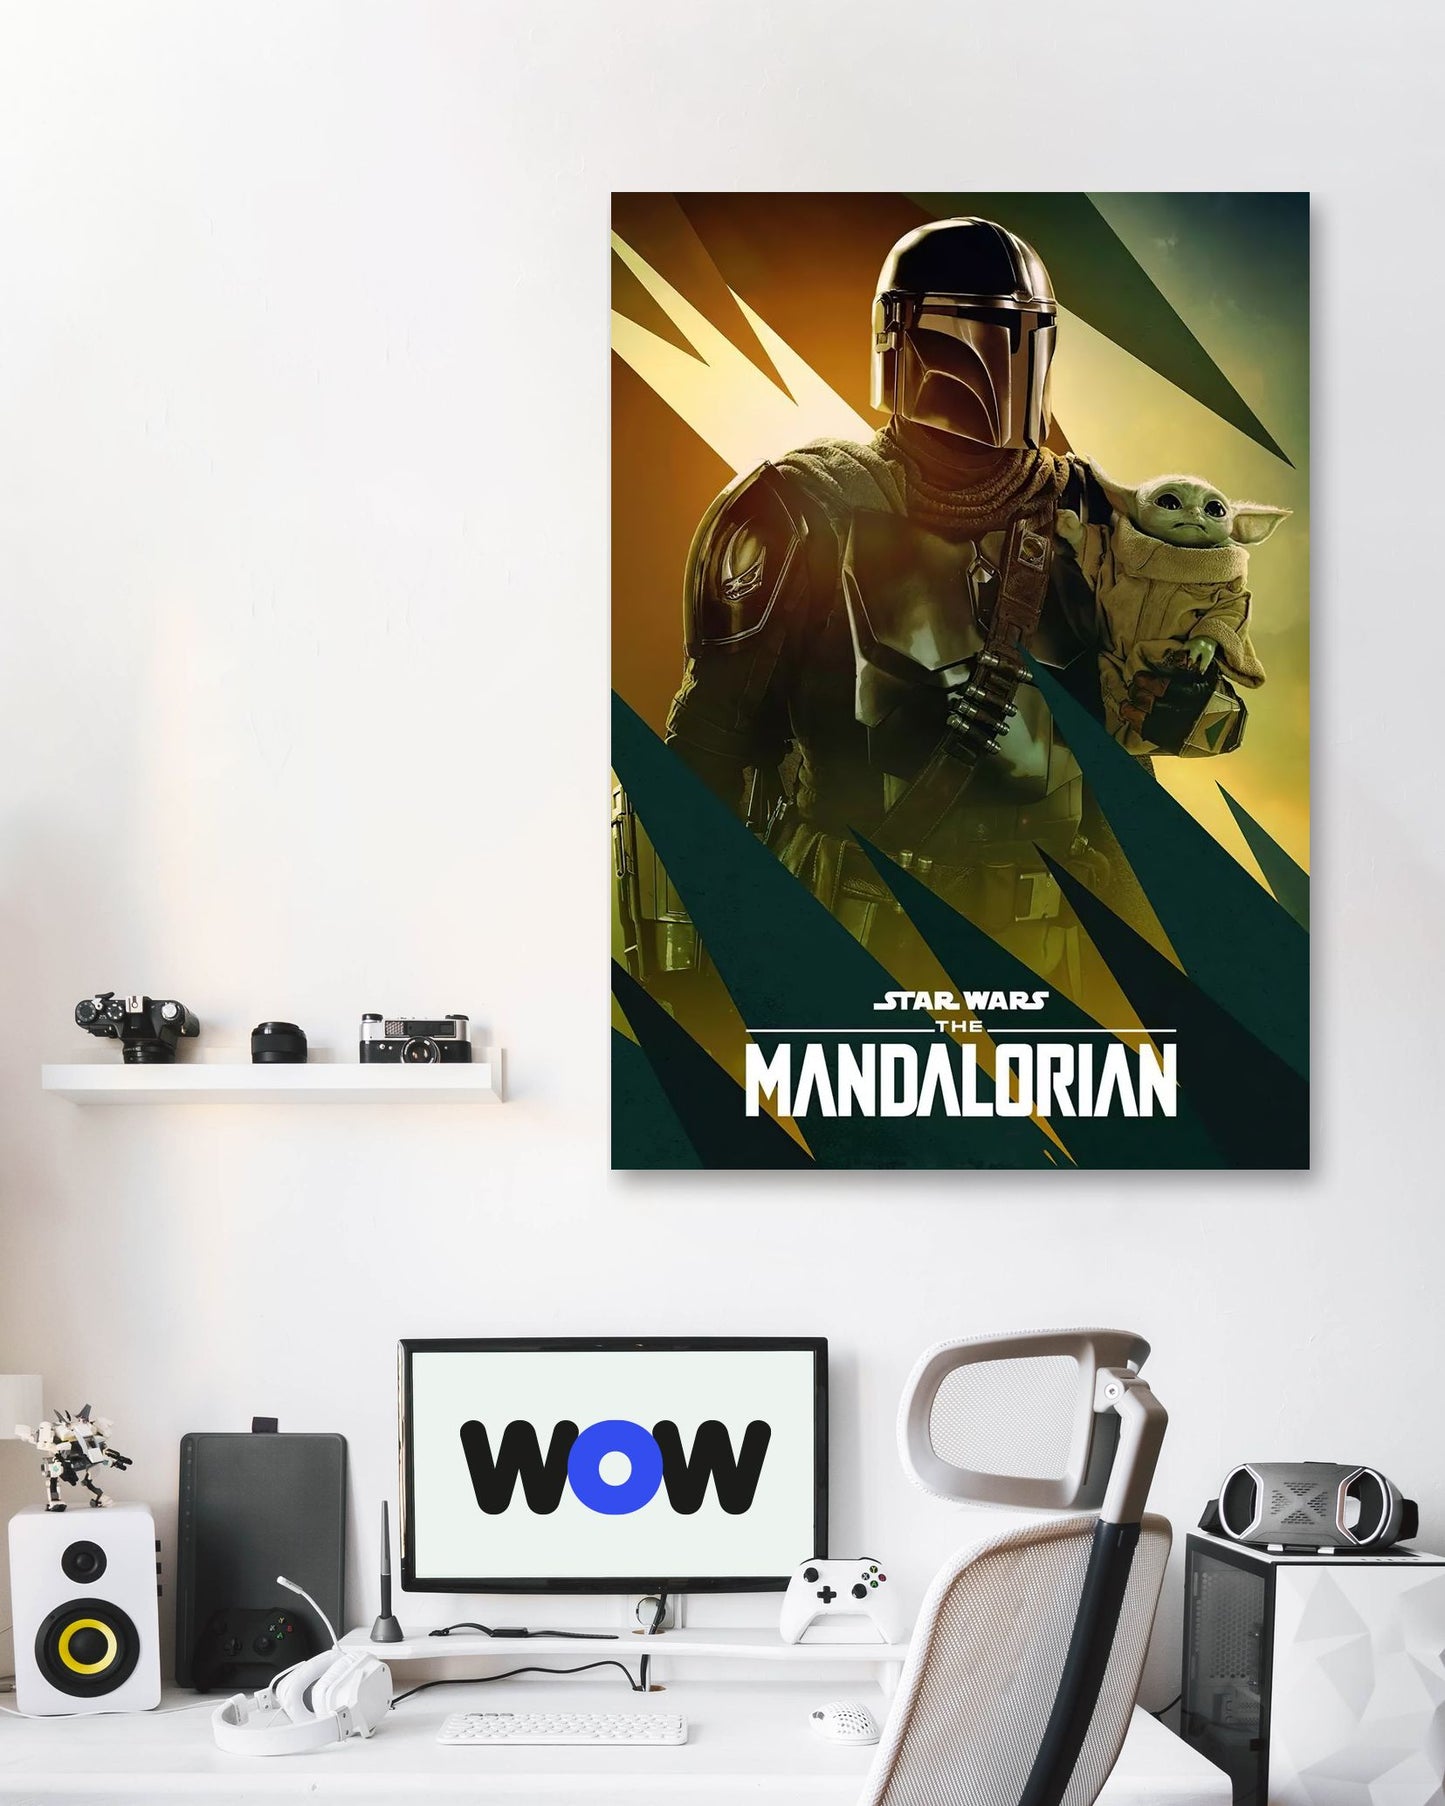 The Mandalorian 3 - @Hollycube